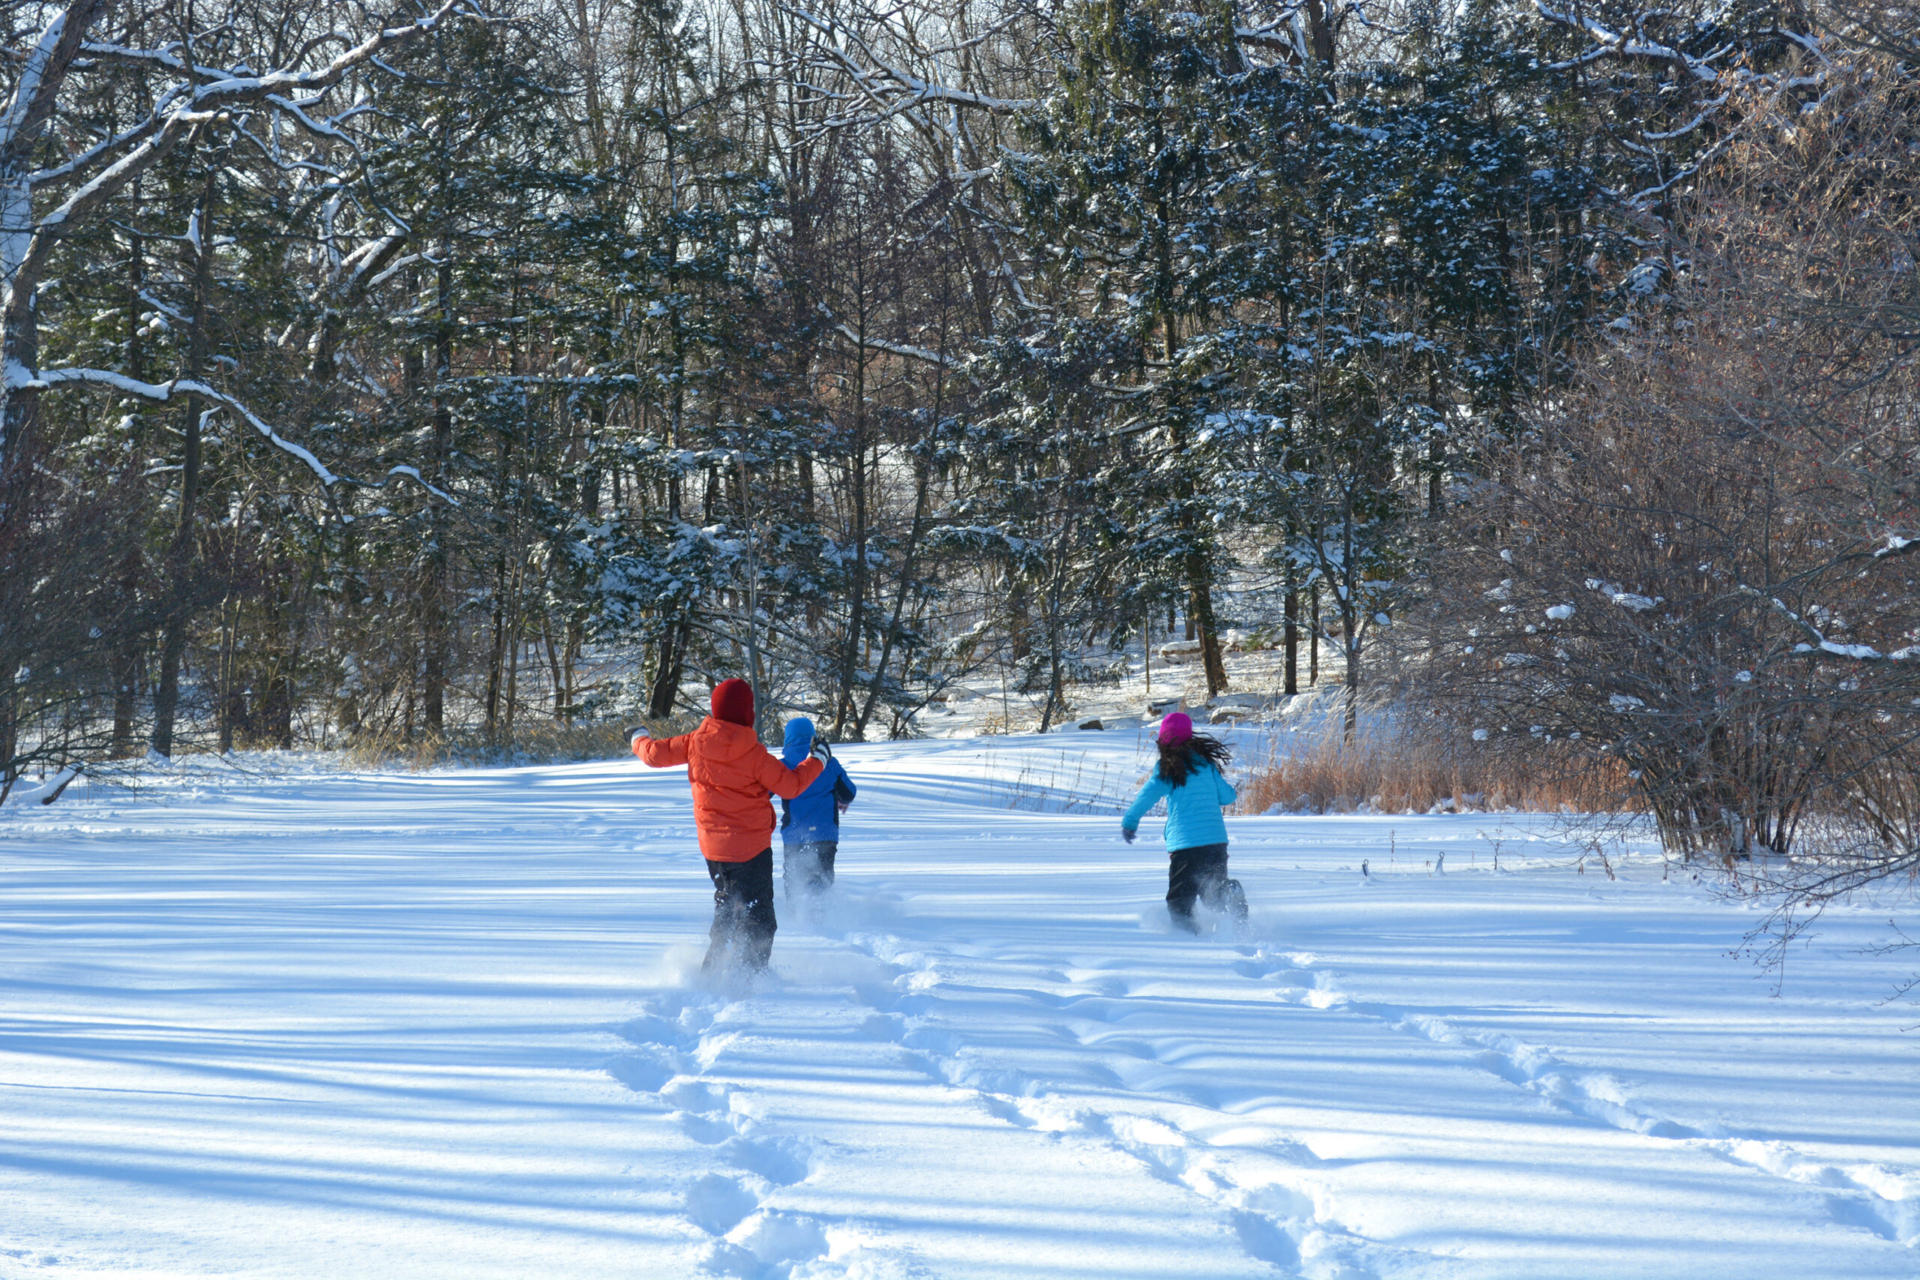 Children running through the snow at an outdoor education program.